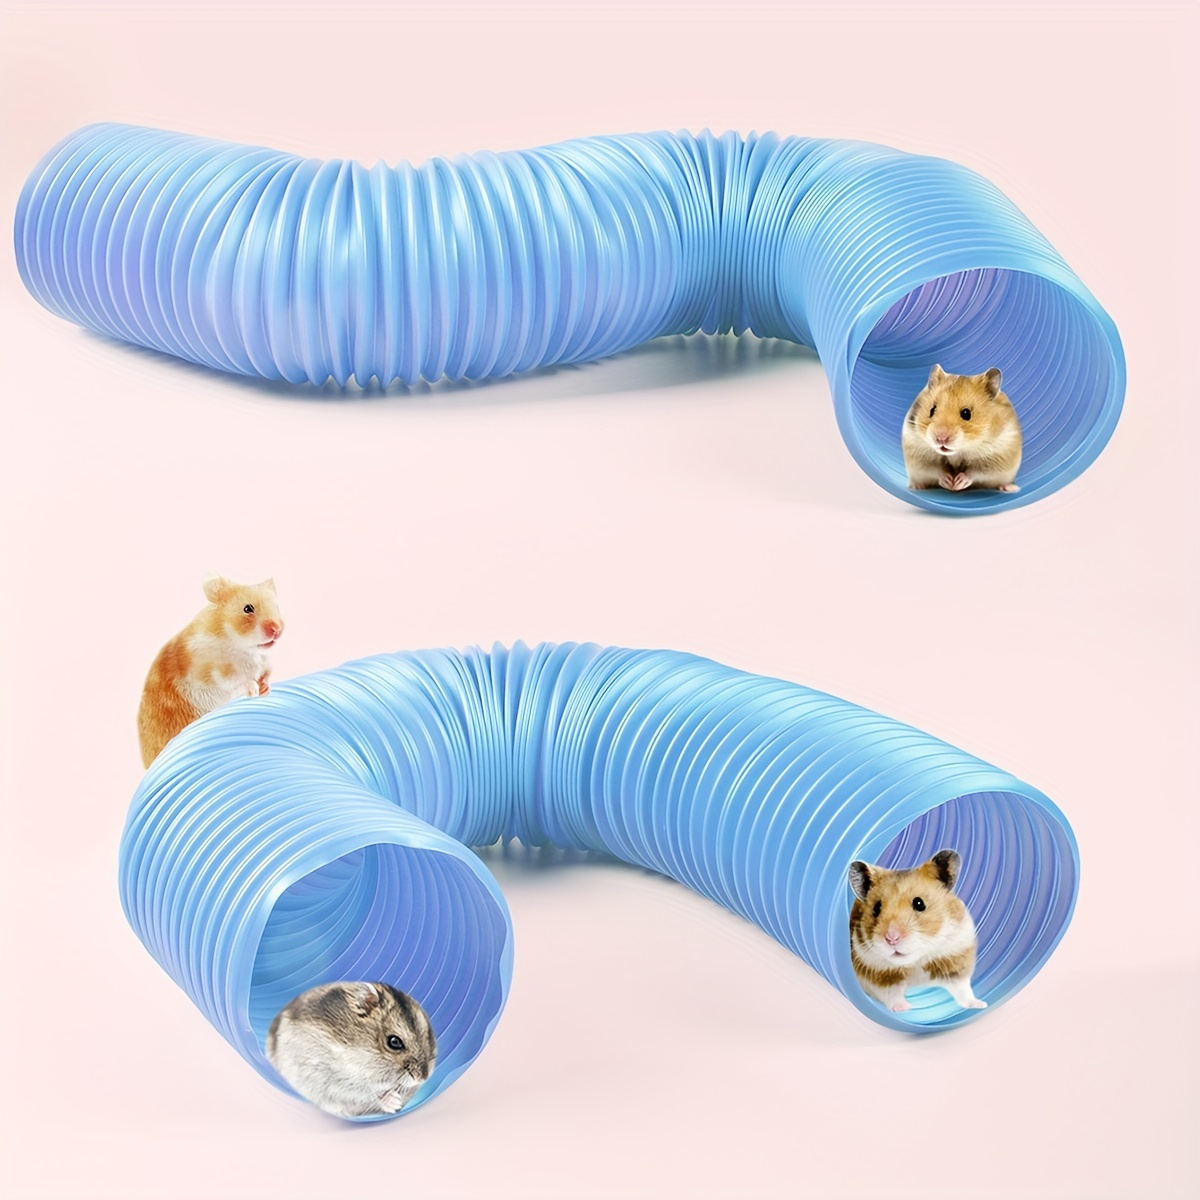 

1pc Telescopic Hamster Tunnel Toy, Flexible Fun Passage Tube For Small Pets - Durable Chinchilla Play Pipe Accessory